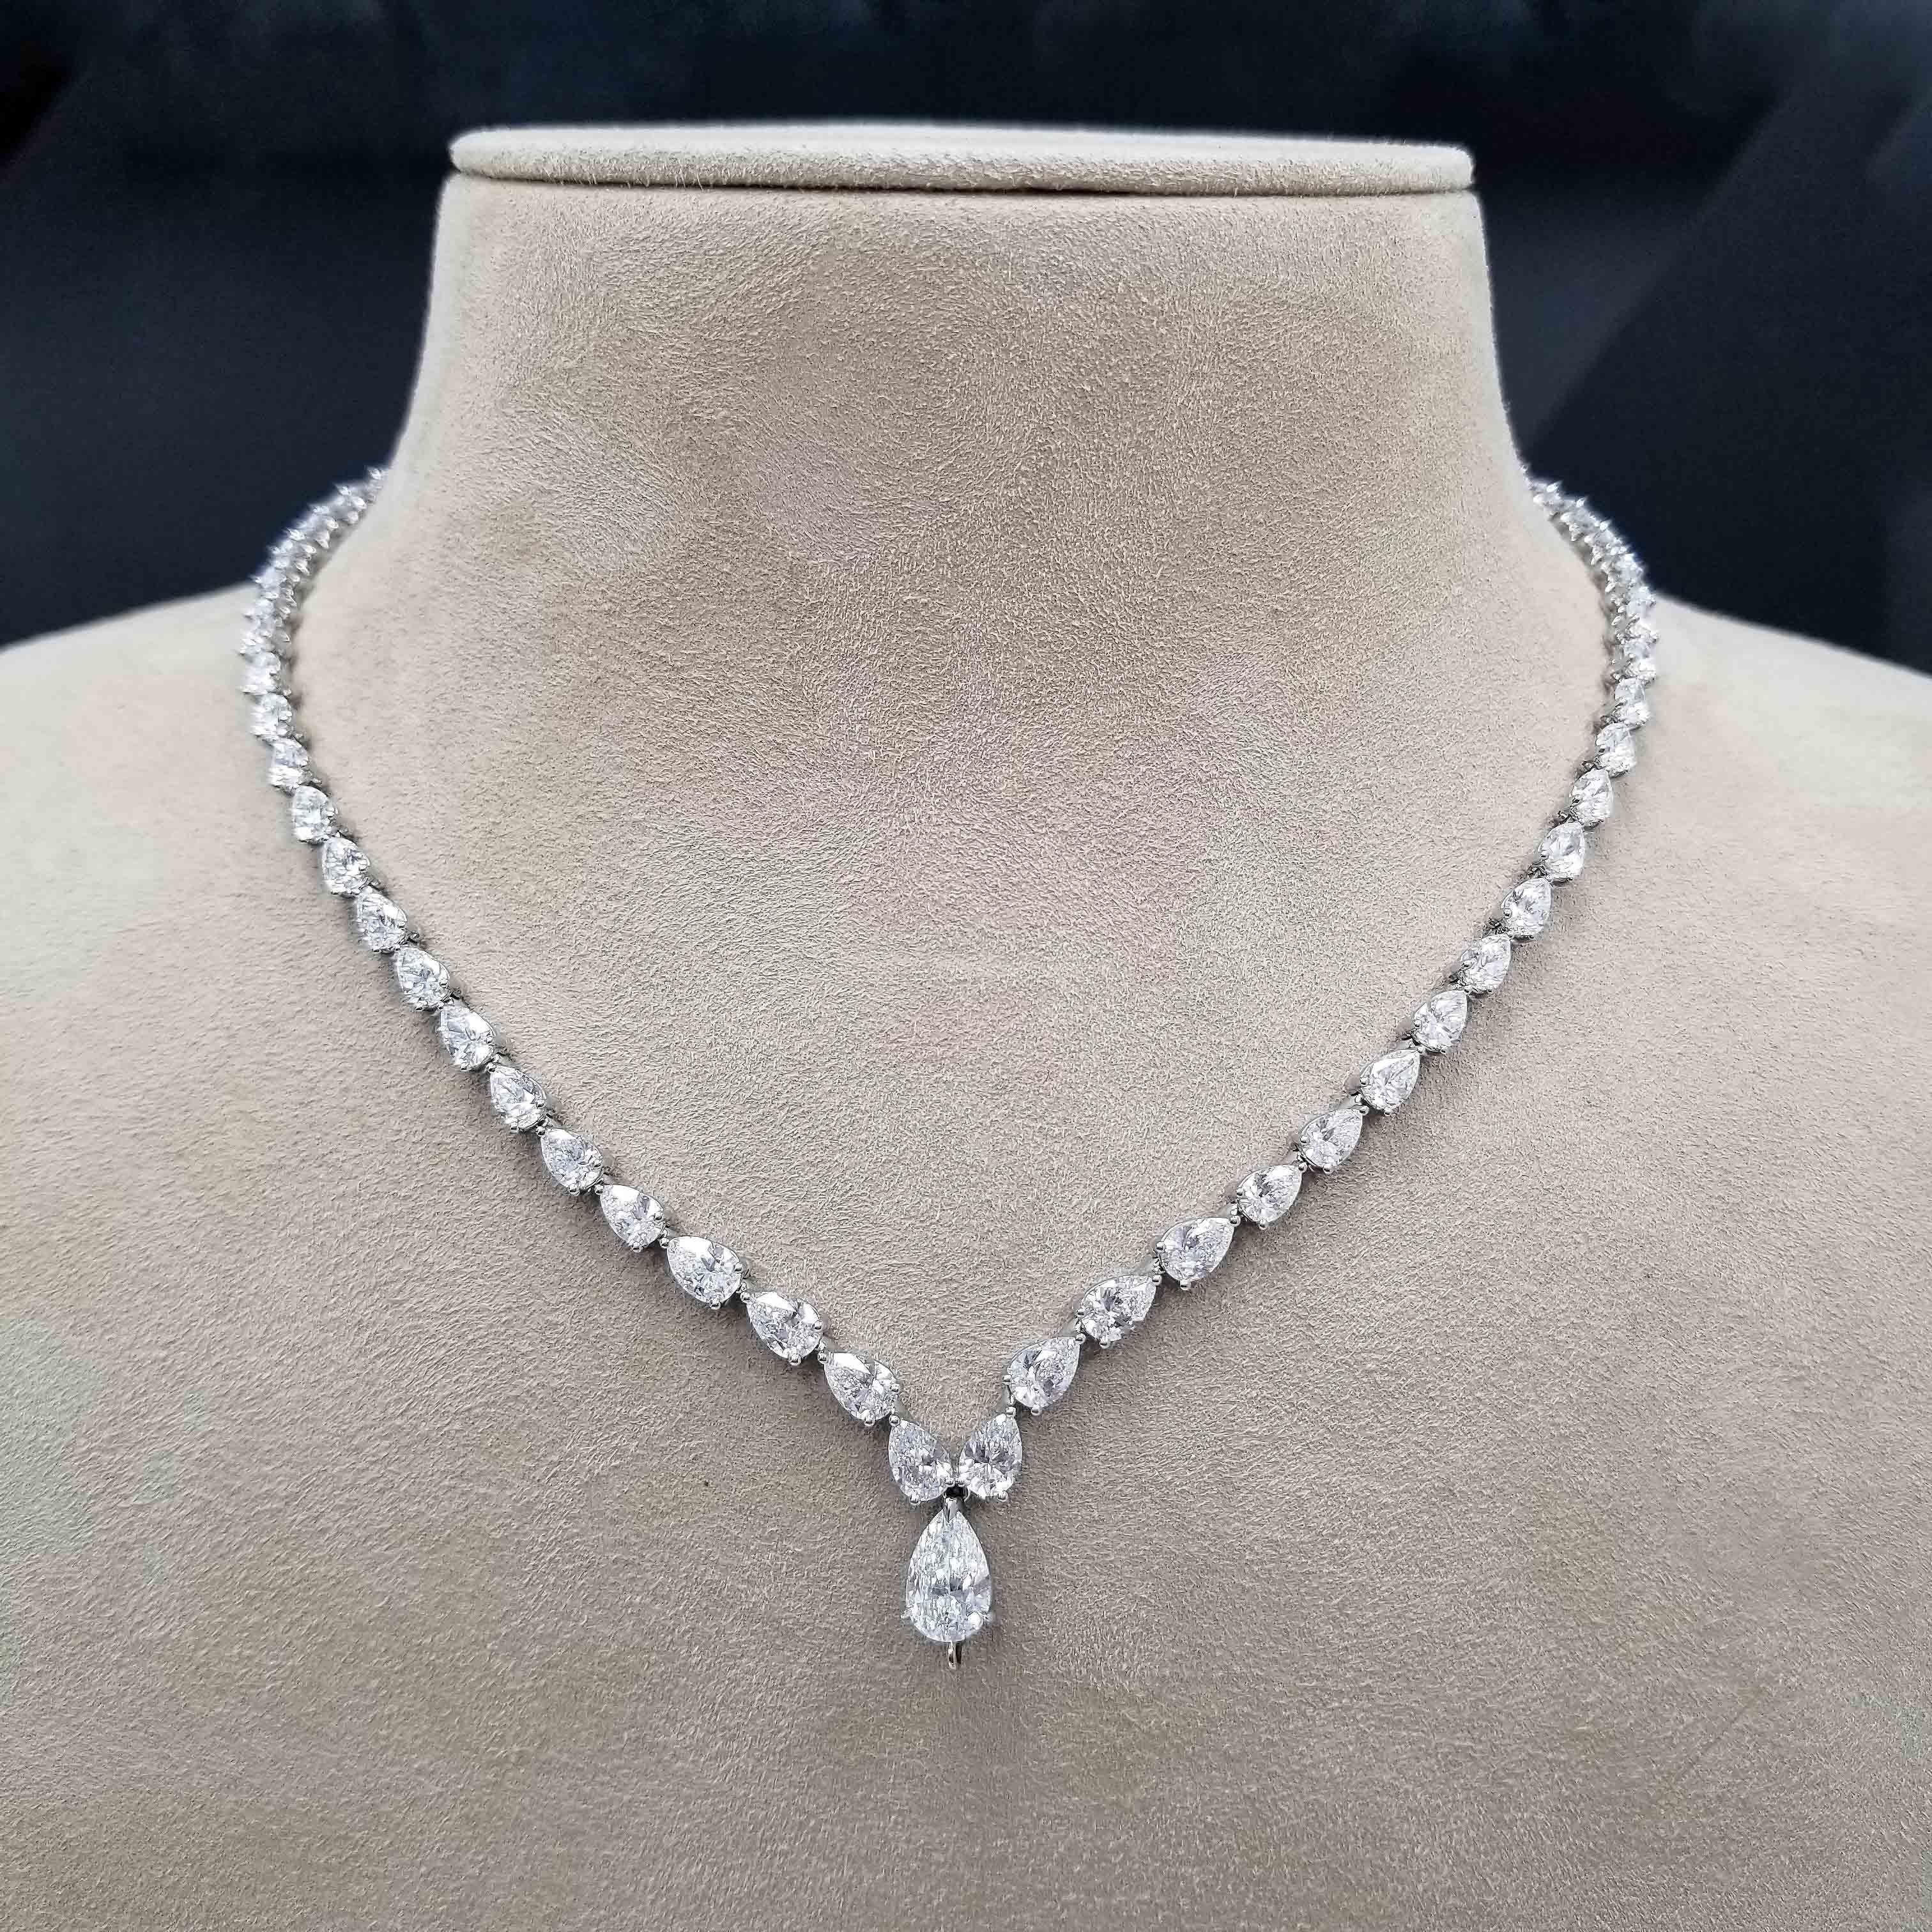 22 carat diamond necklace price